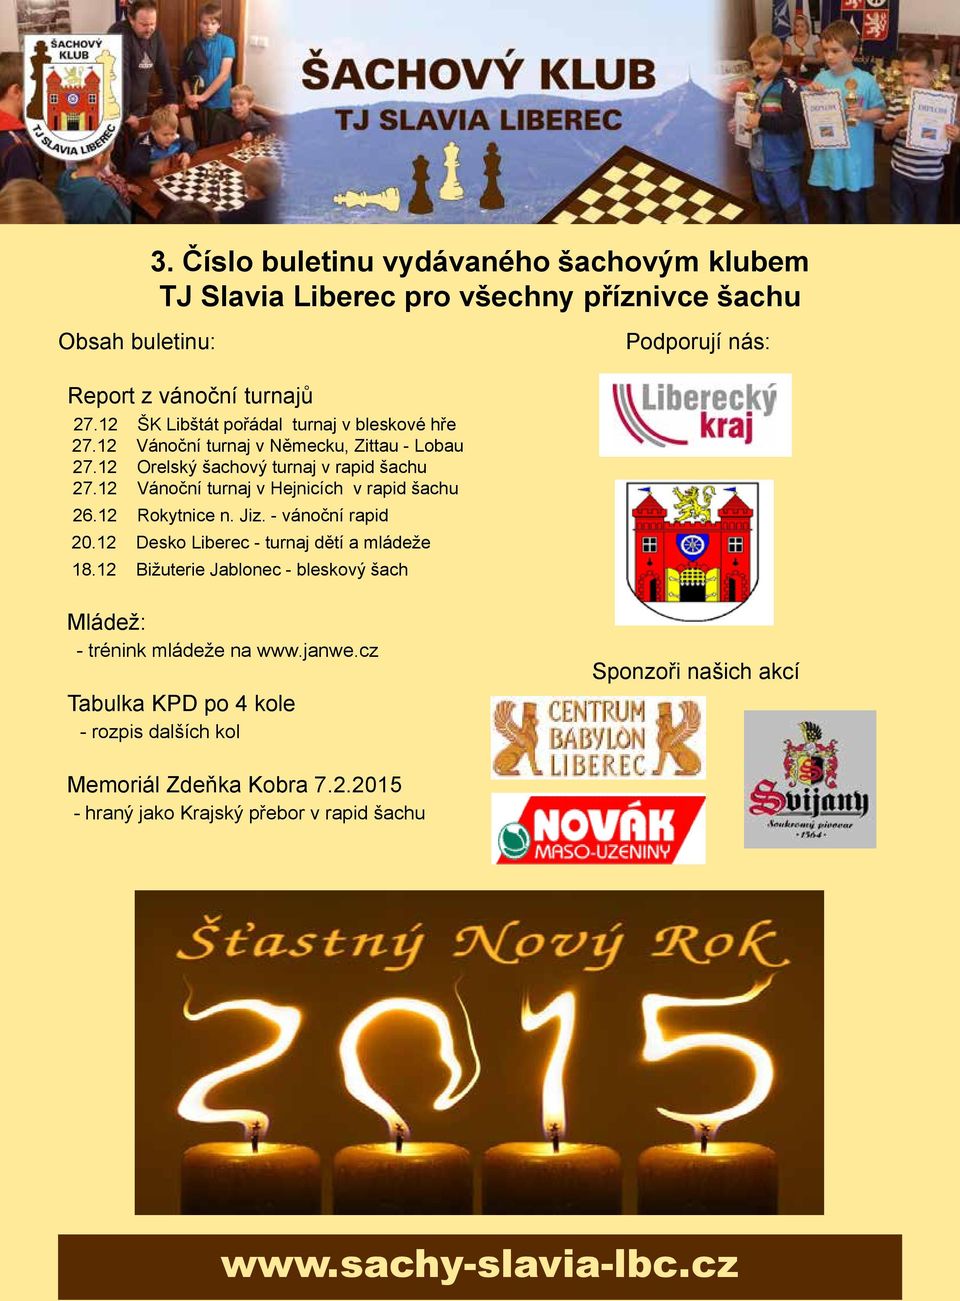 12 Vánoční turnaj v Hejnicích v rapid šachu 2 6. 1 2 R o k y t n i c e n. J i z. - v á n o č n í r a p i d 20.12 Desko Liberec - turnaj dětí a mládeže 18.